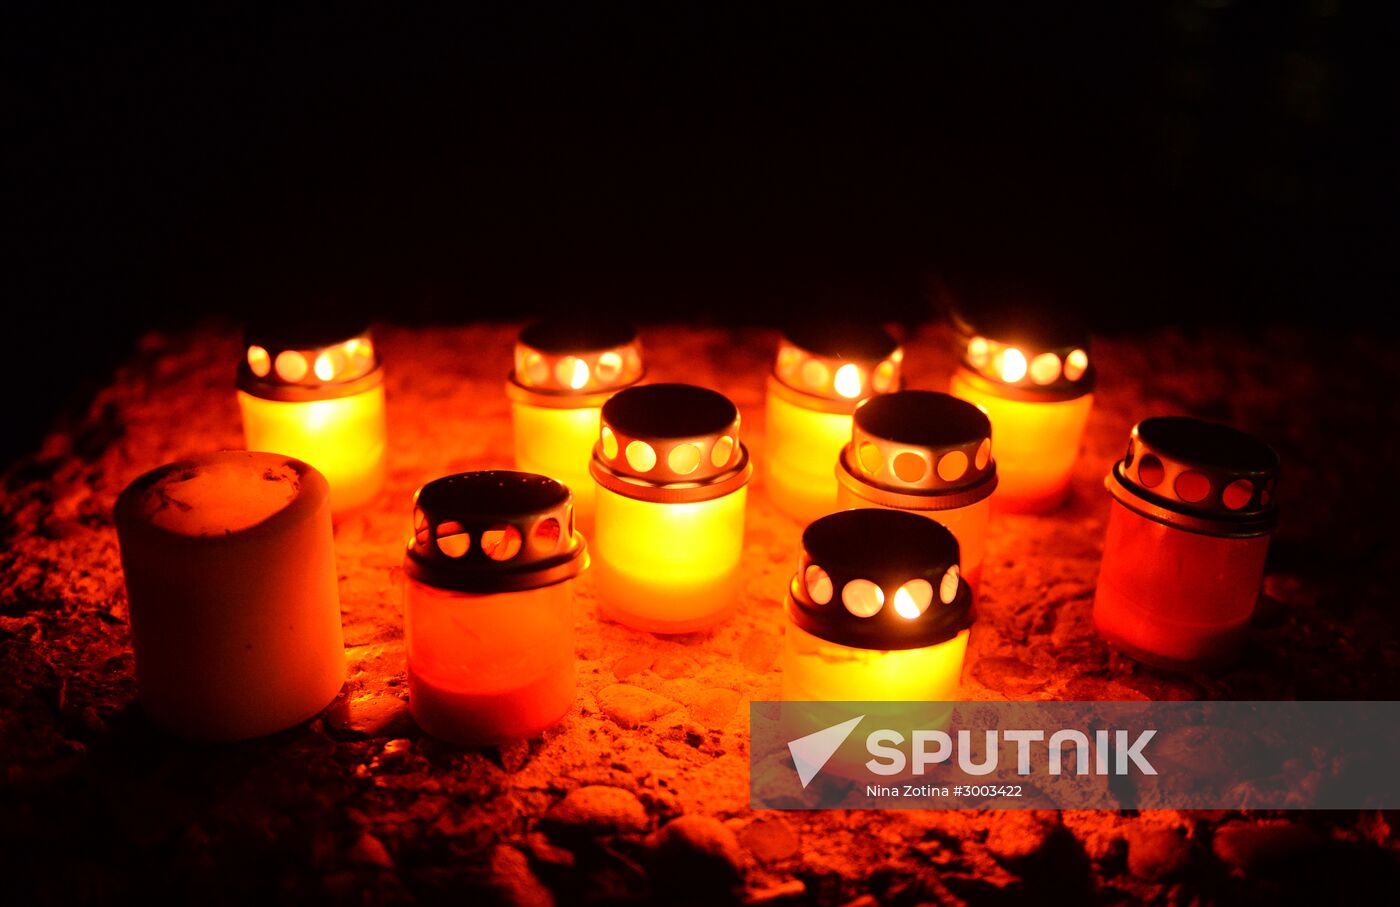 Vigil in memory of Sochi air crash victims